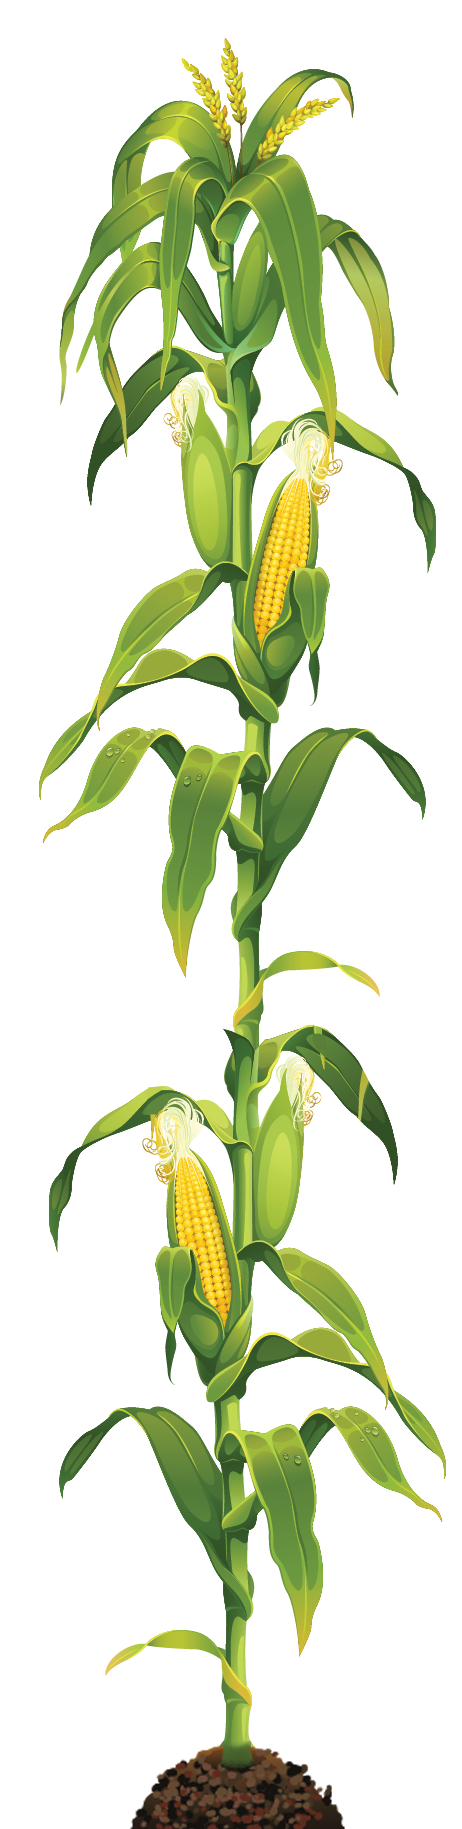 Corn on the cob Maize Caramel corn Clip art - maize plant png download ...